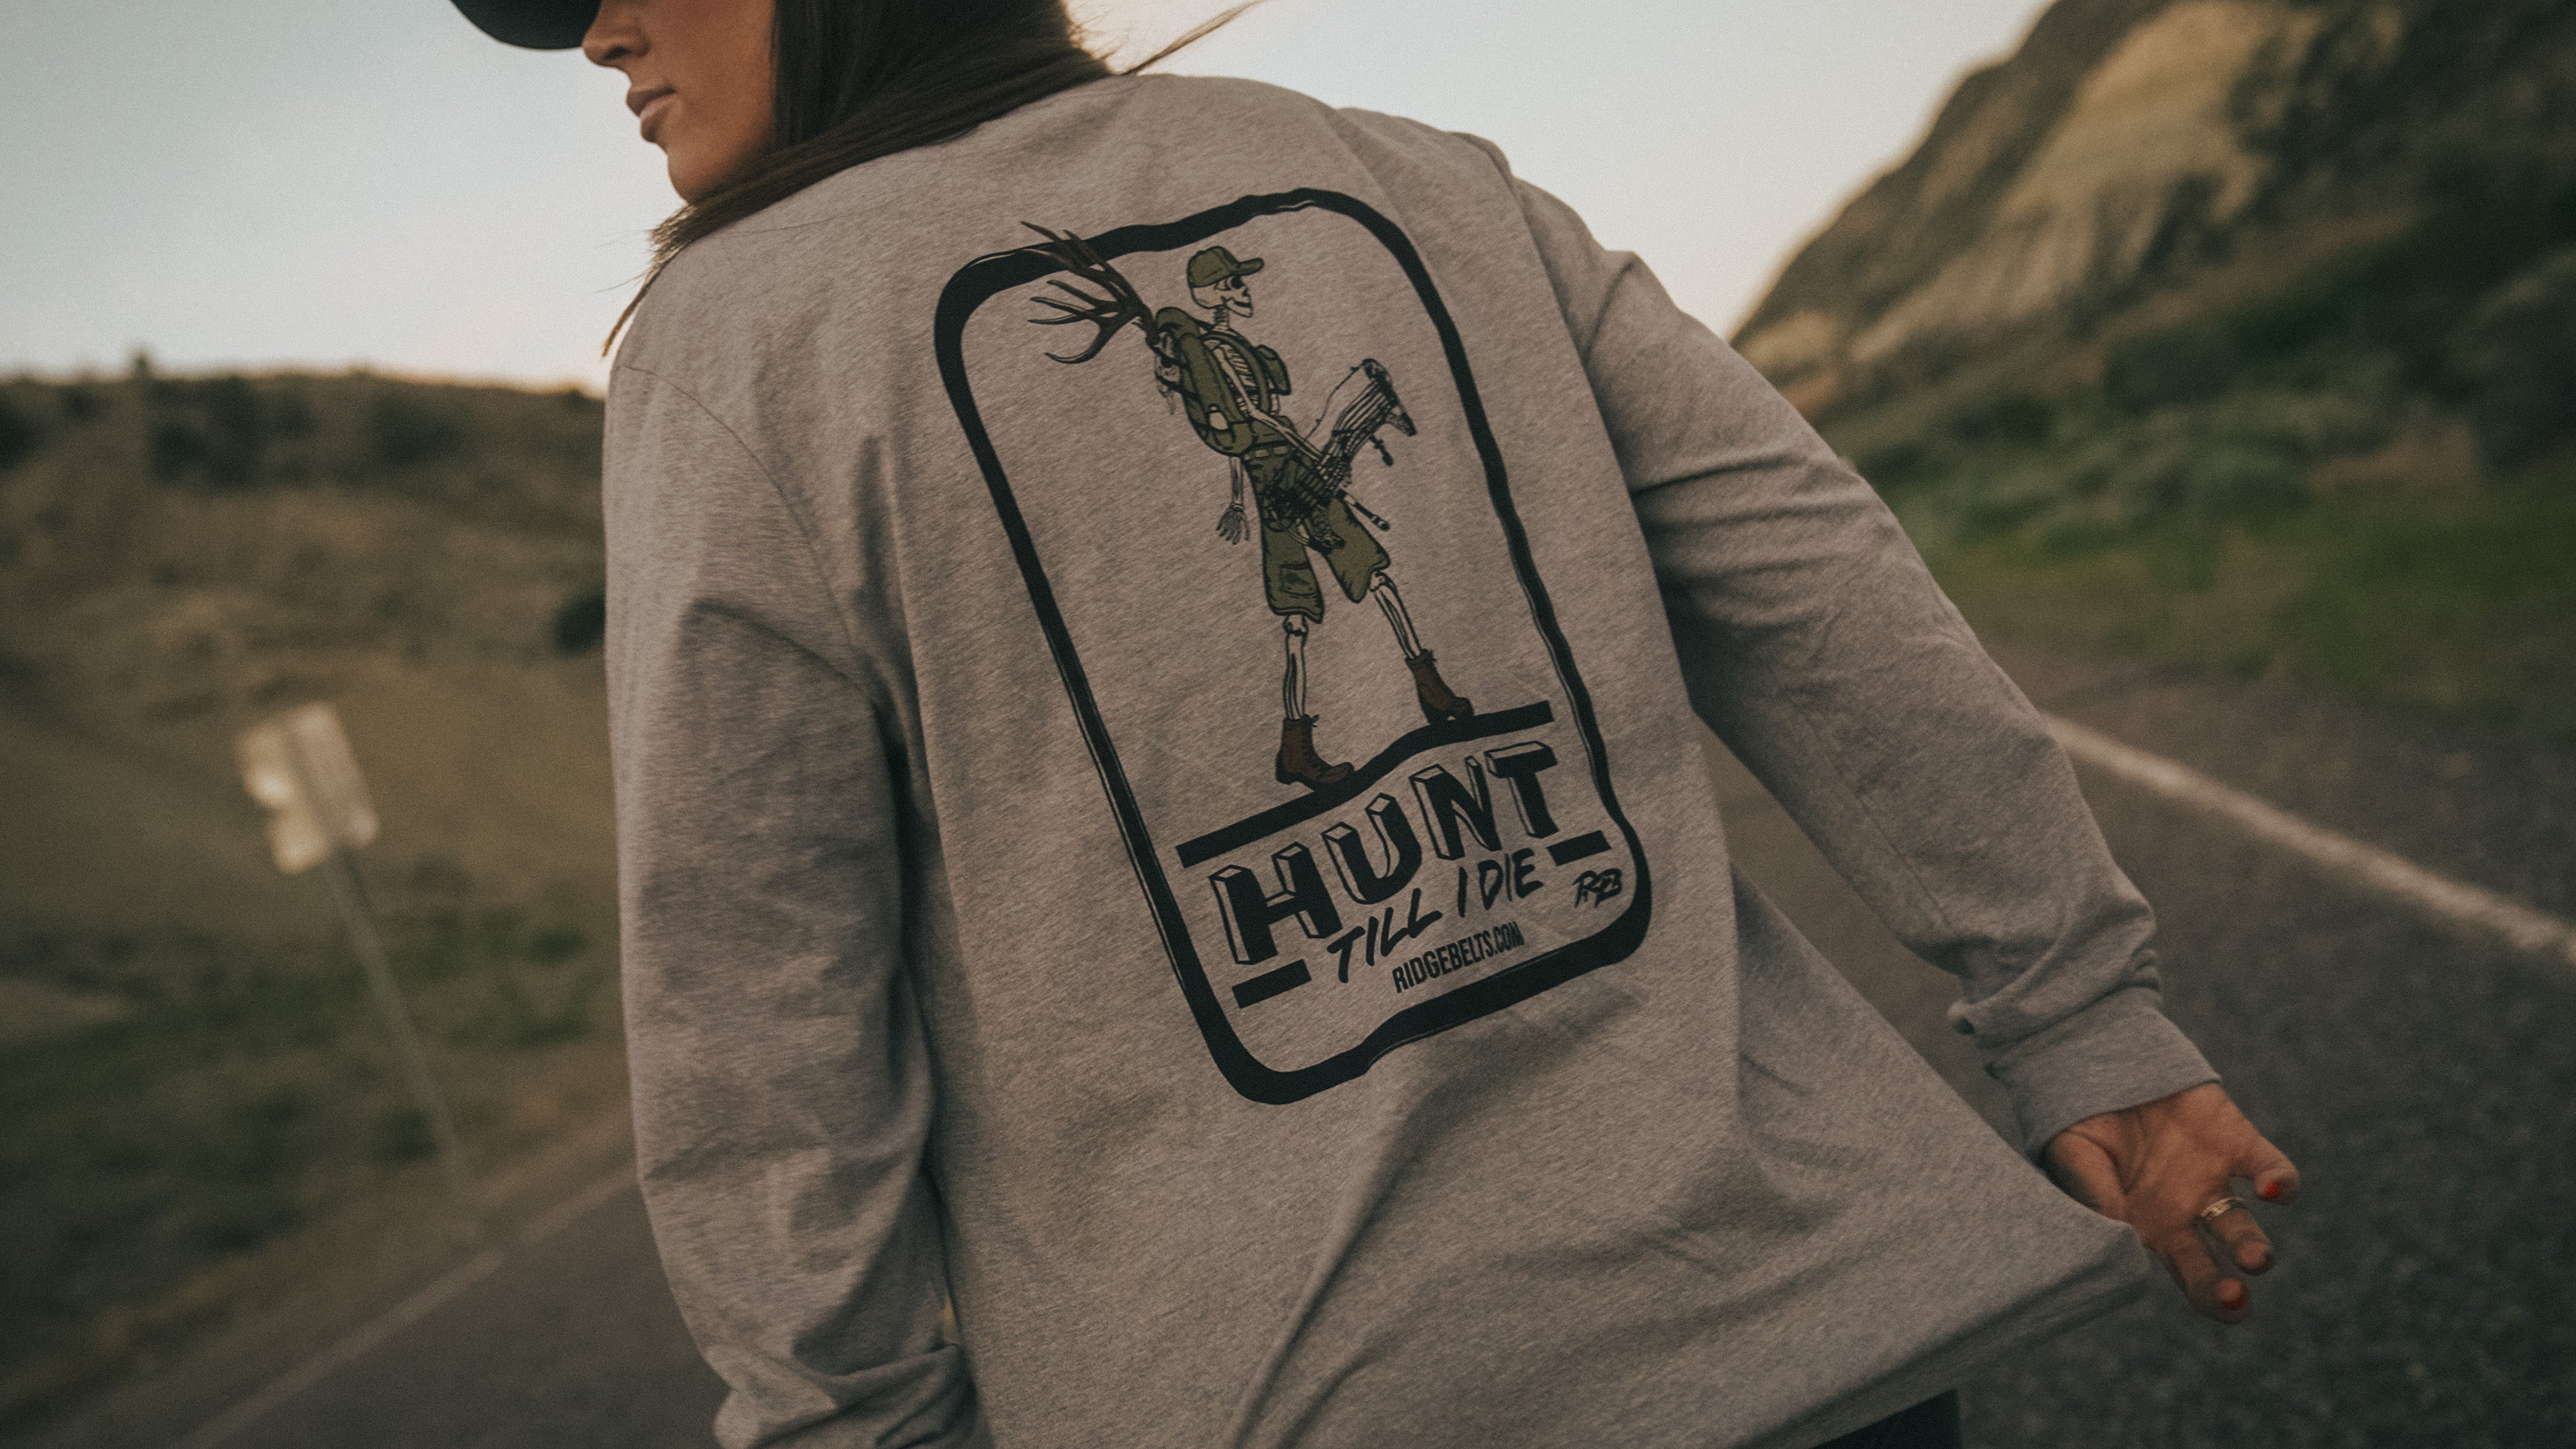 Bow hunting shirt. Skeleton hunting shirt design. Hunt till I die shirt from Ridge Belts. Long sleeve hunting shirt.